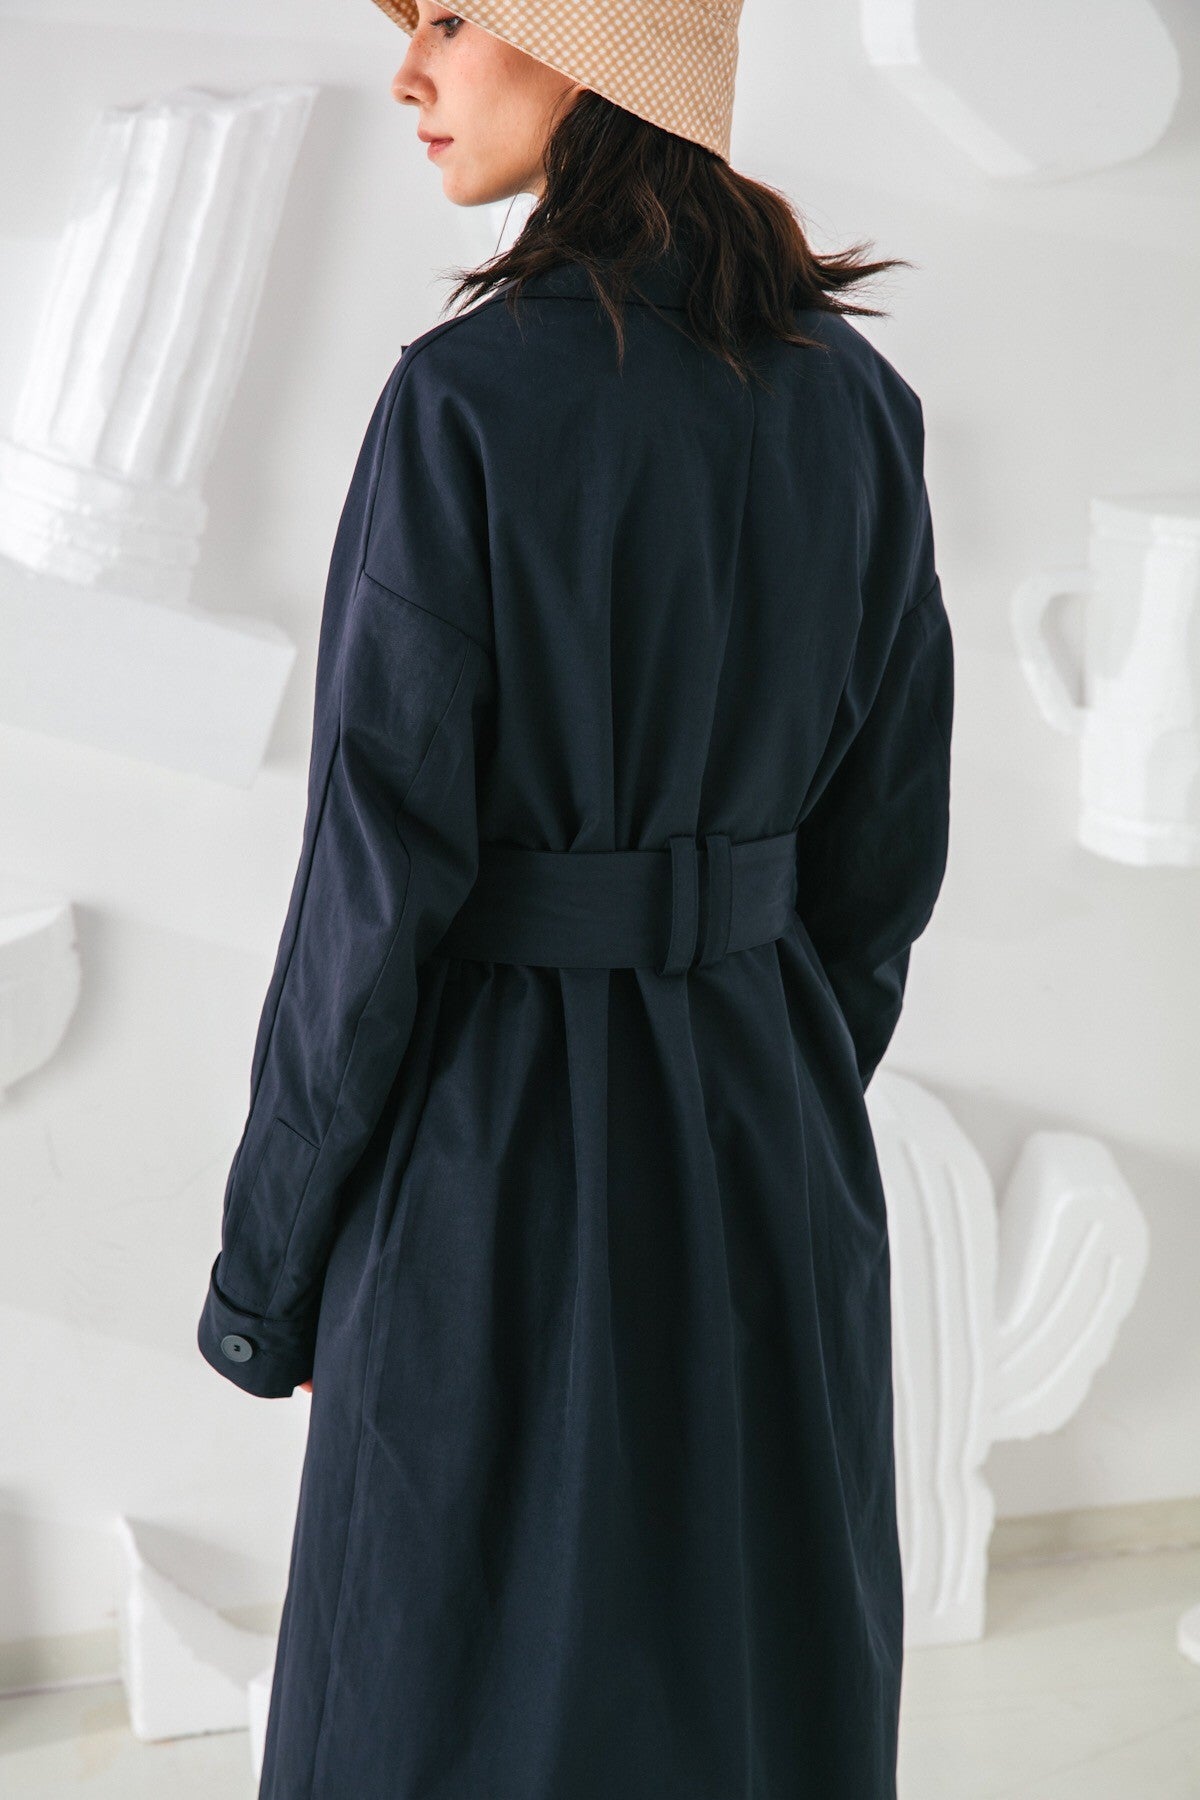 SKYE San Francisco SF shop ethical modern minimalist quality women clothing fashion Coraline Trench Coat blue 4